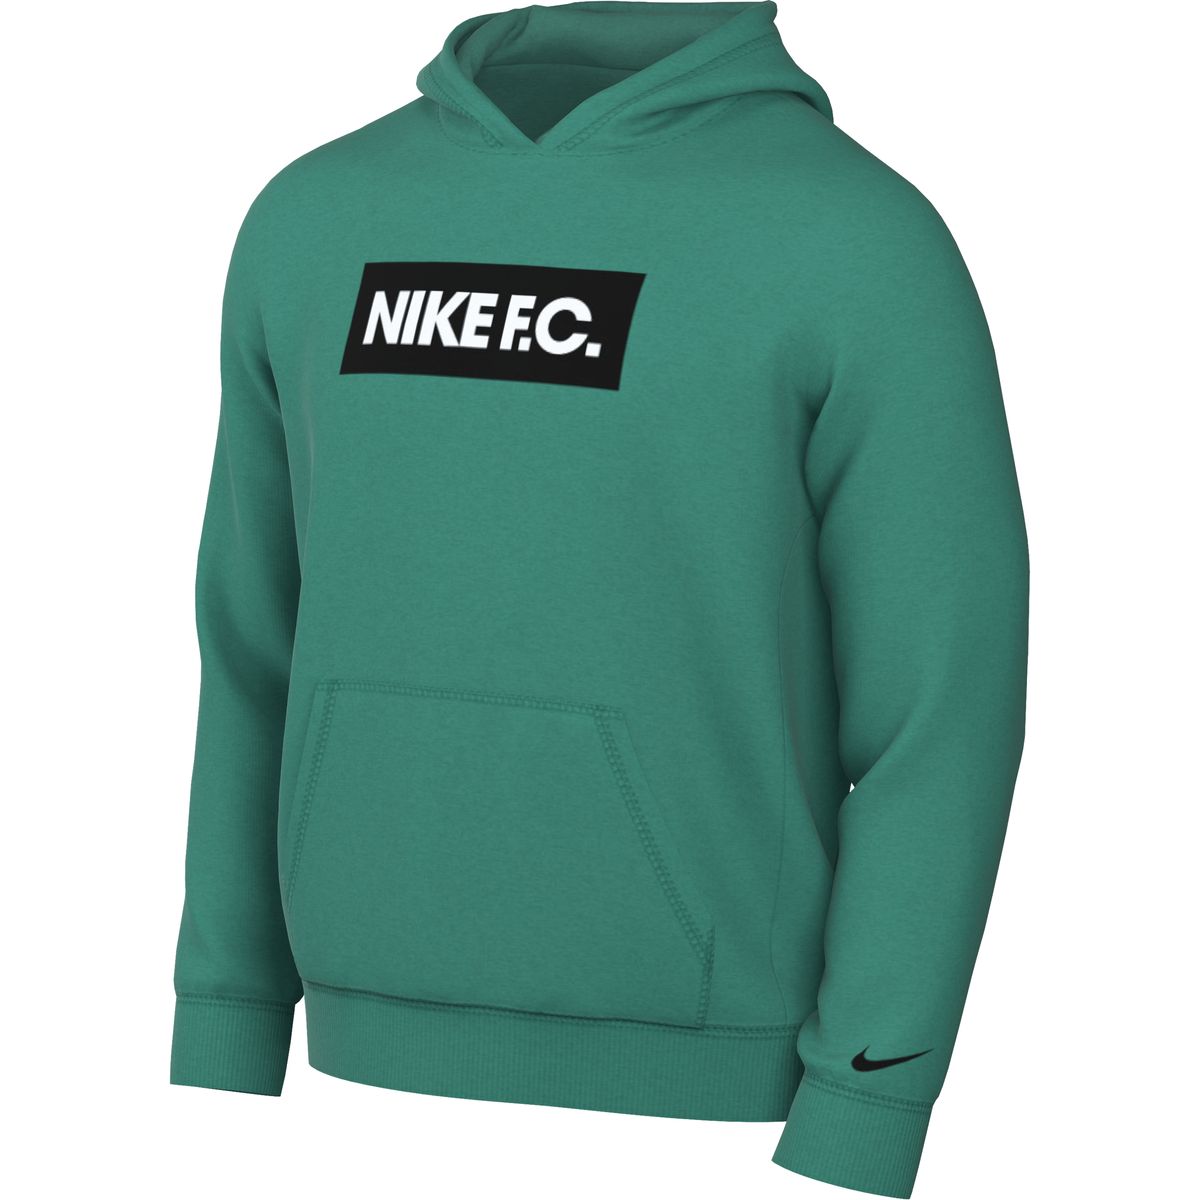 Nike F.C. Herren Kapuzensweater